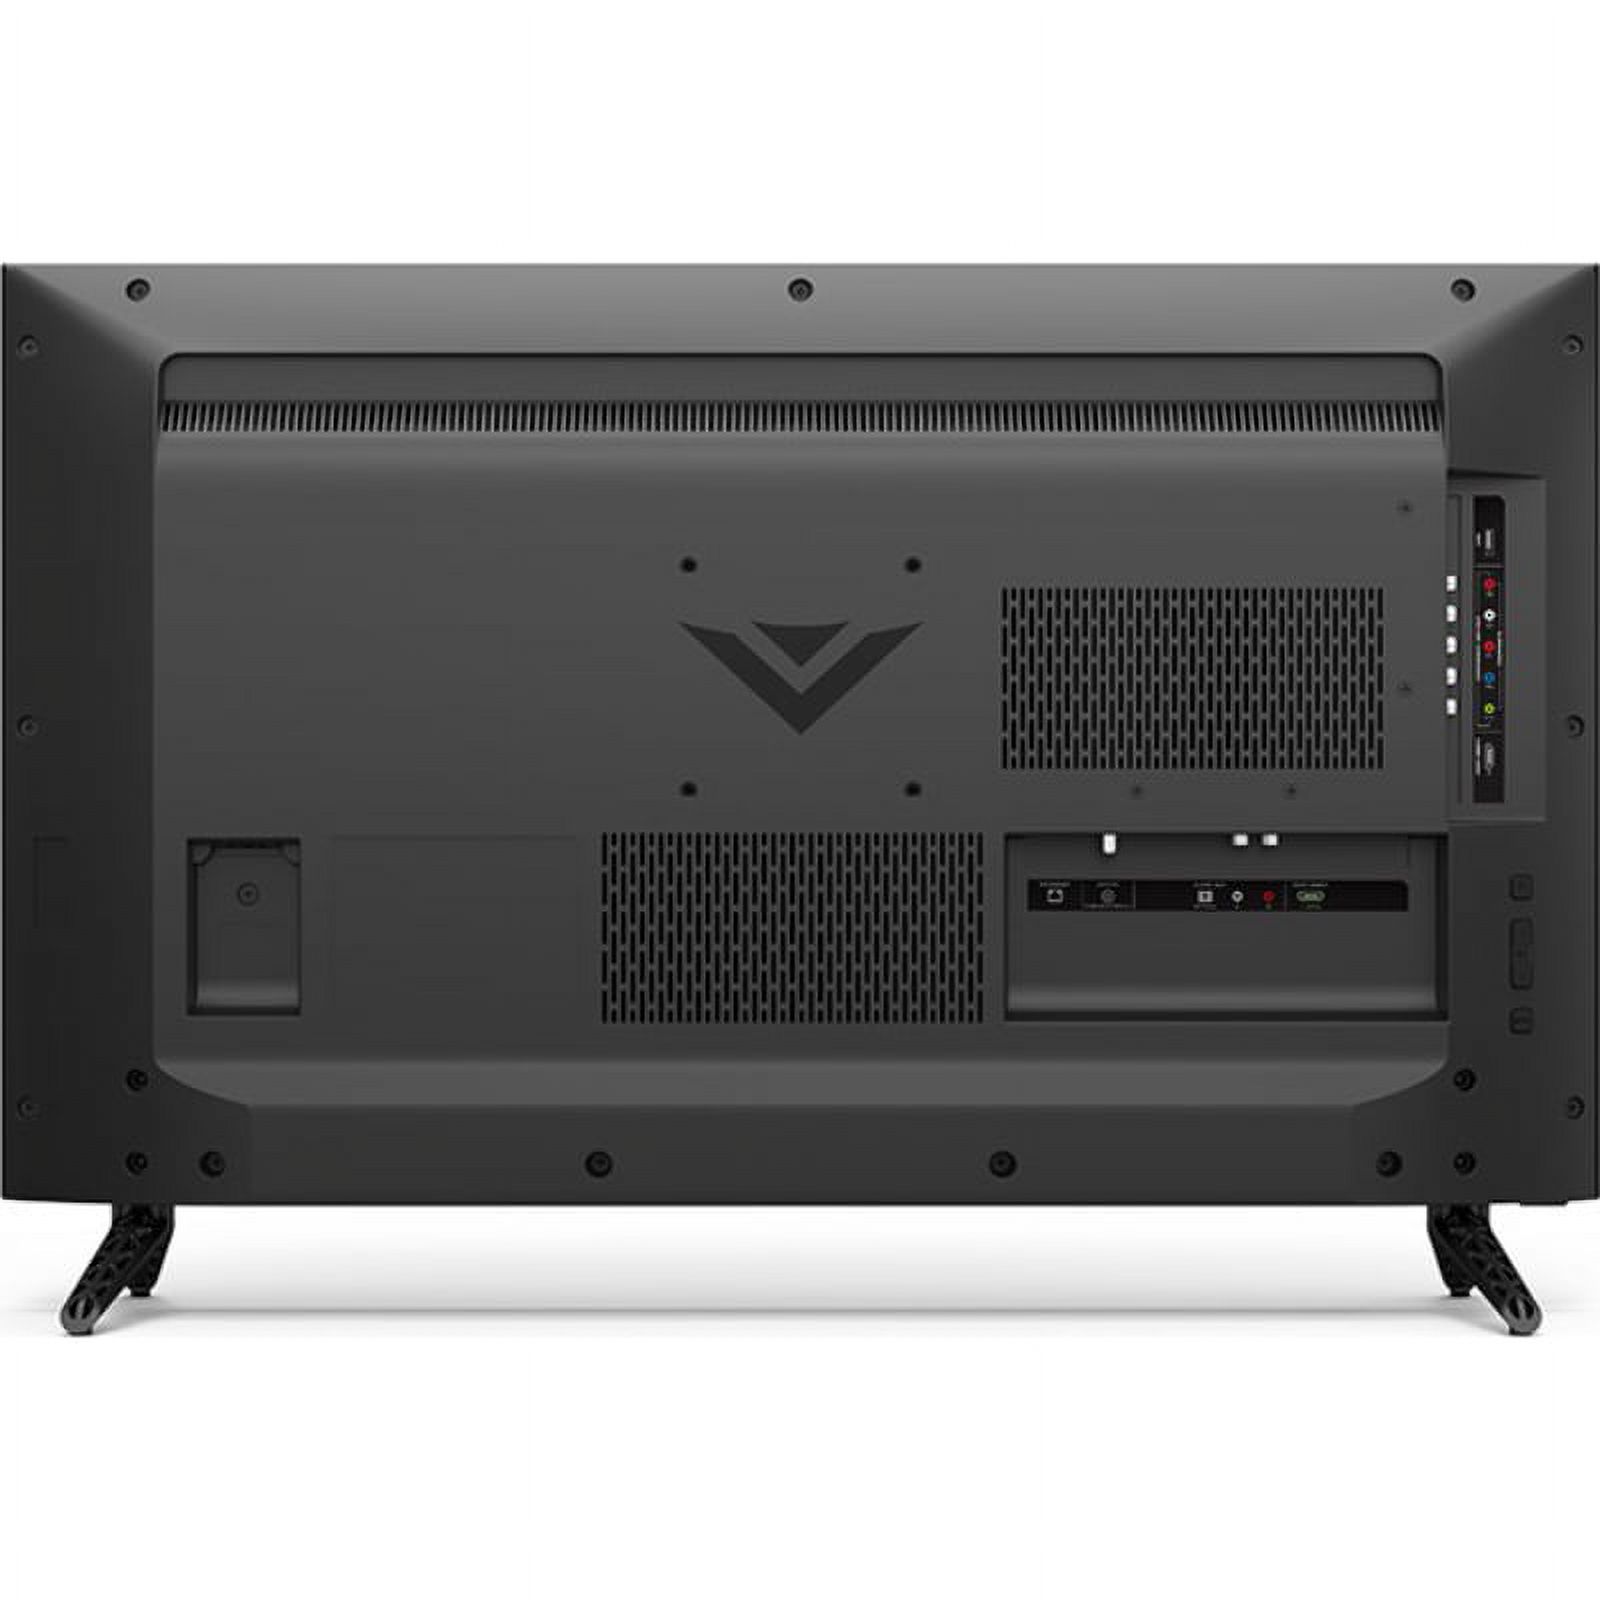 VIZIO 32" Class Smart LED-LCD TV (E32H-D1) - image 4 of 7